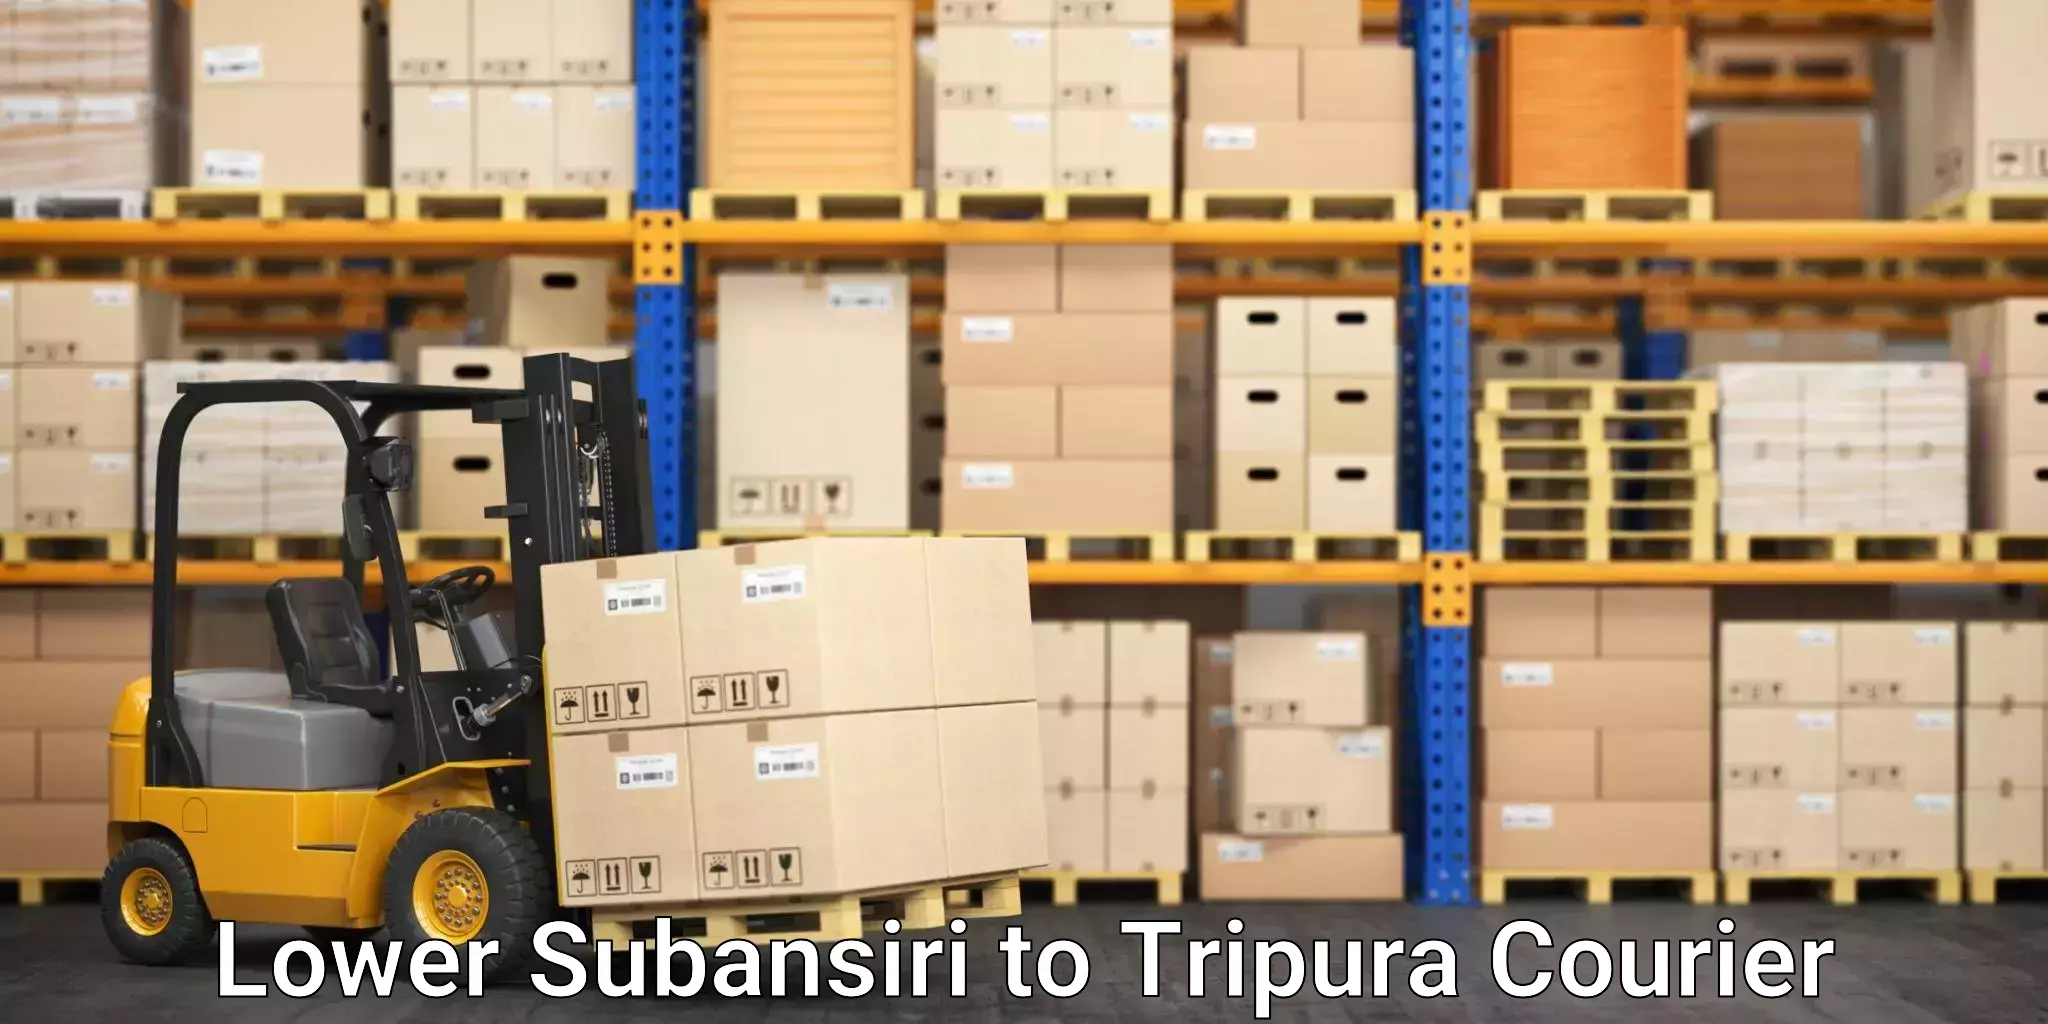 Courier service efficiency in Lower Subansiri to Agartala